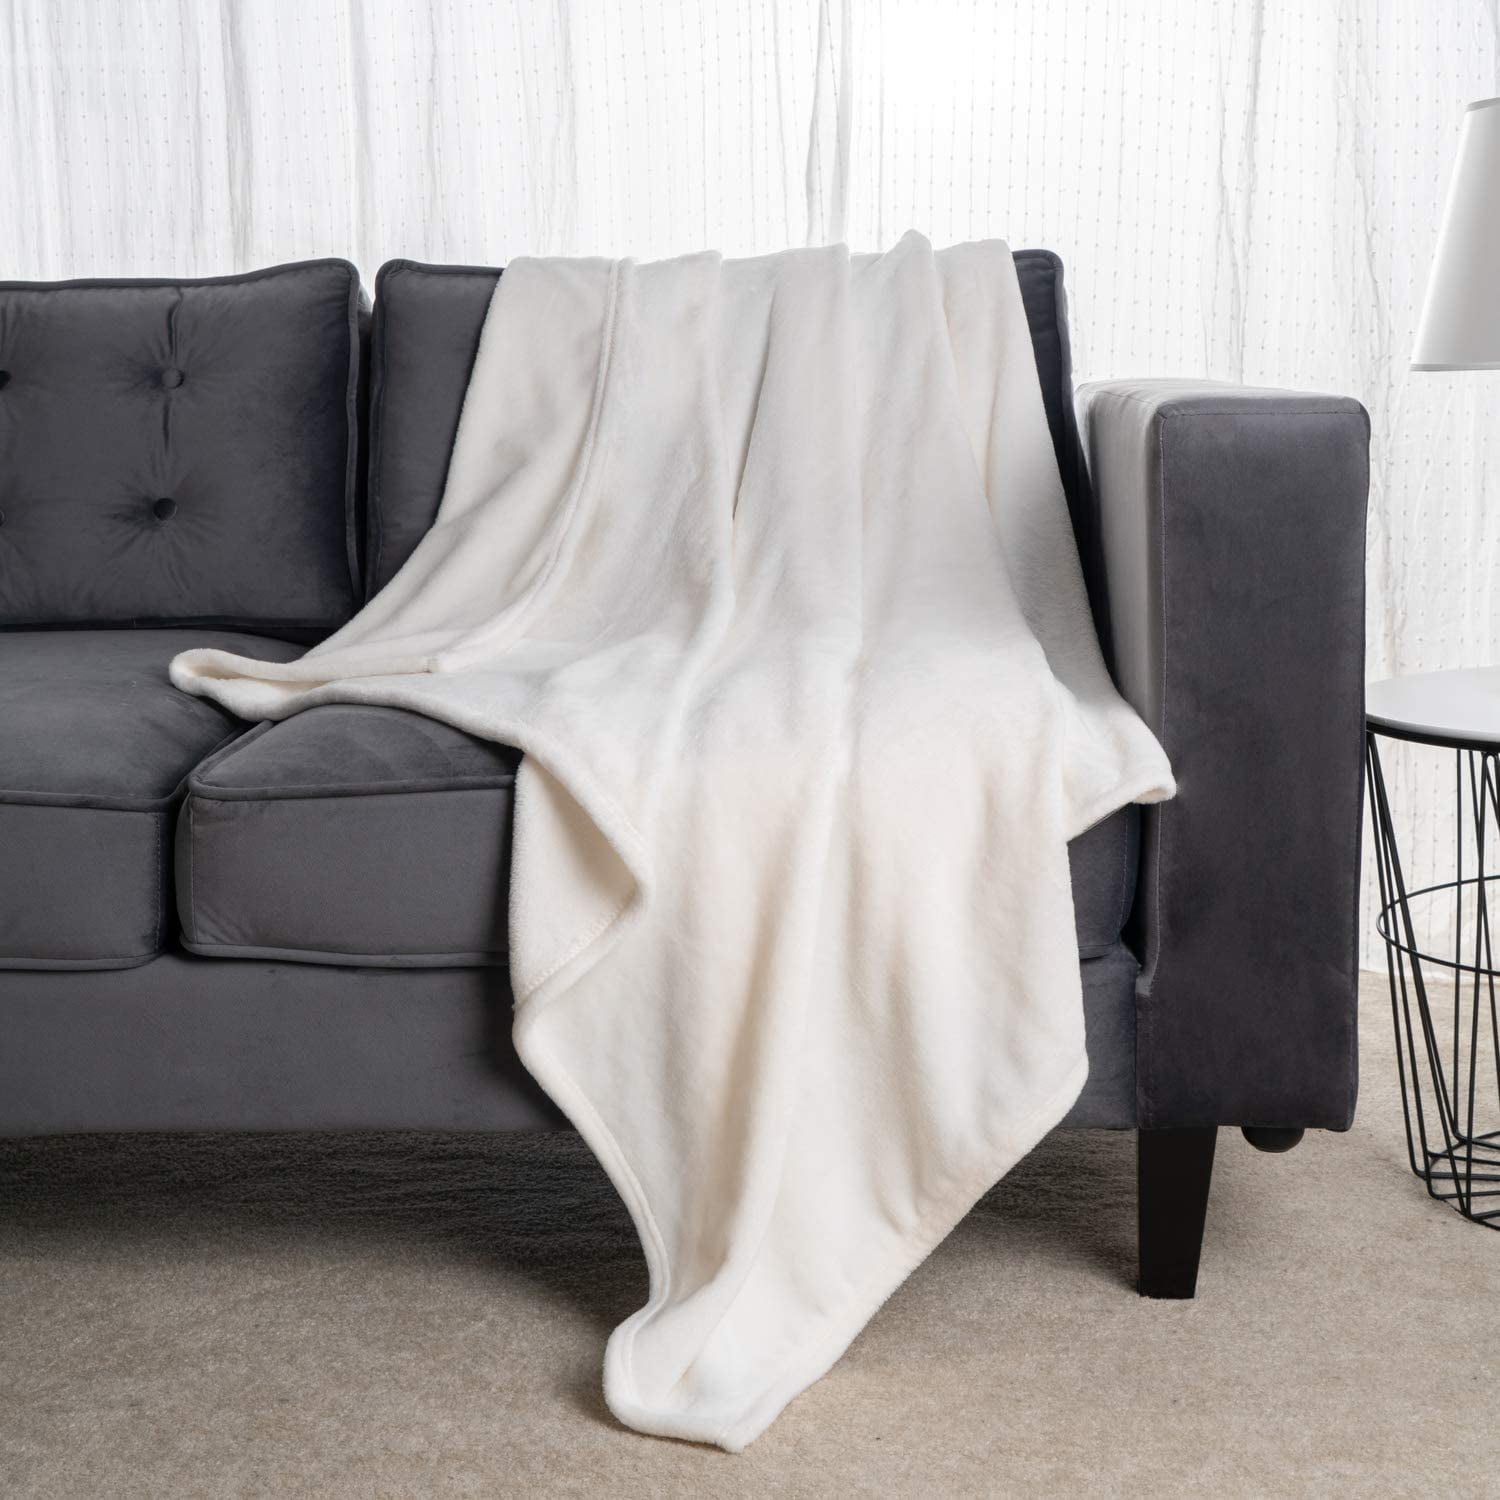 Details about   Oversized Sofa Microfiber Wearable Blanket TV Set Blanket One Size Fits All Blue